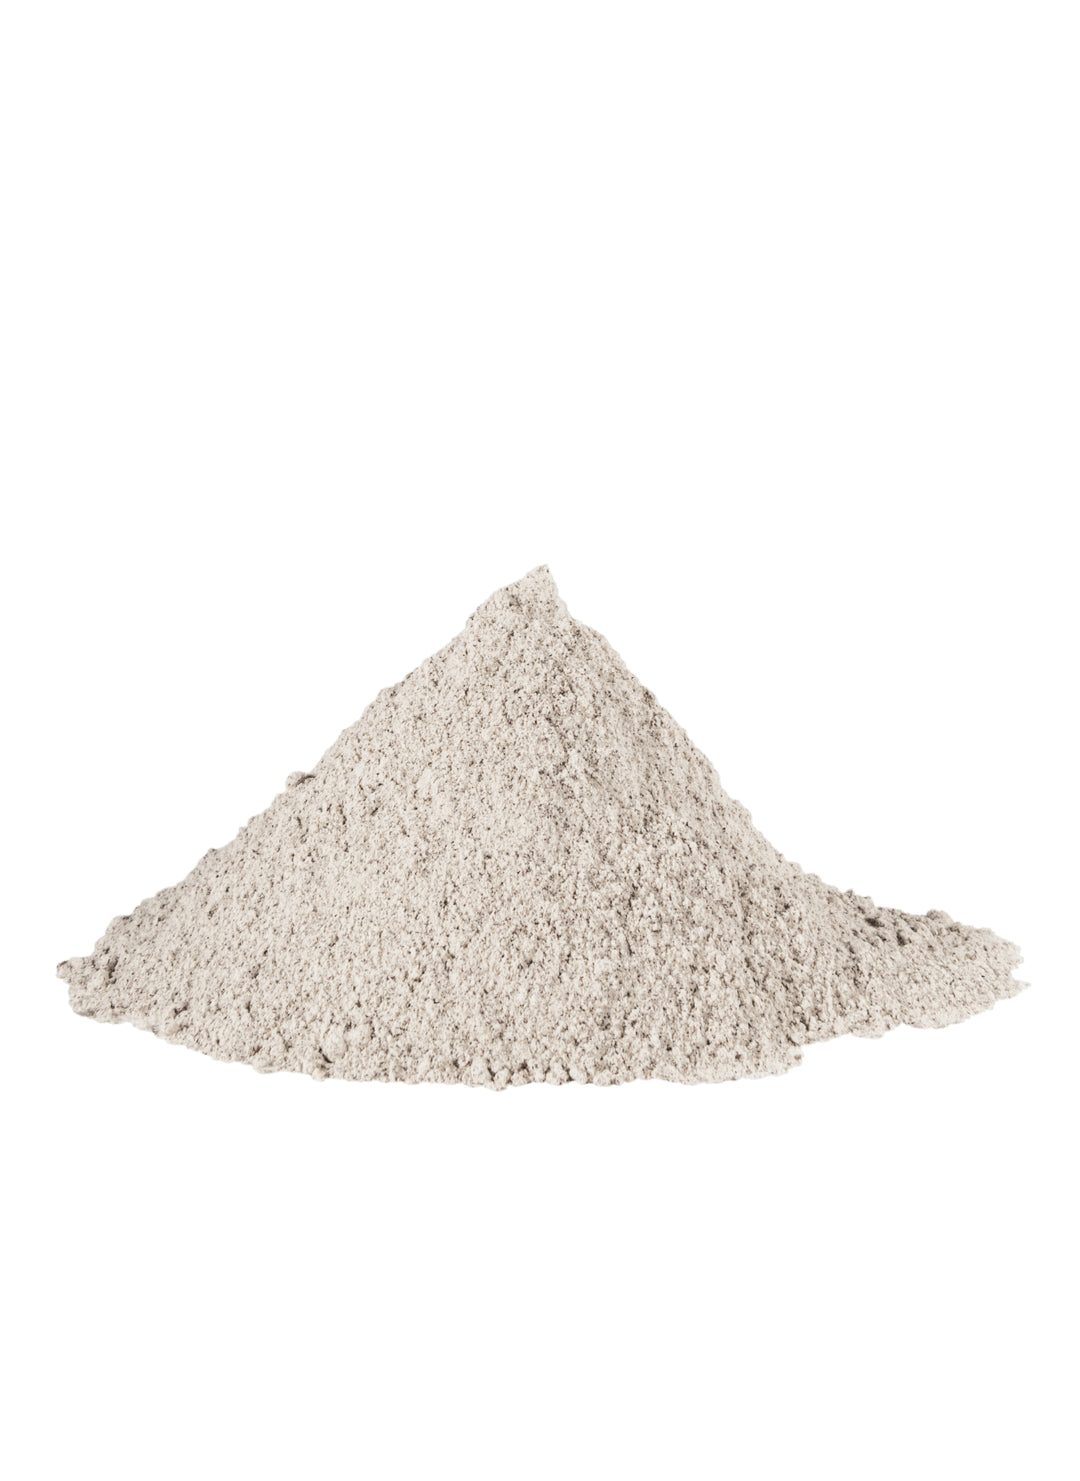 Bob's Red Mill Natural Foods Inc Buckwheat Flour-22 oz.-4/Case